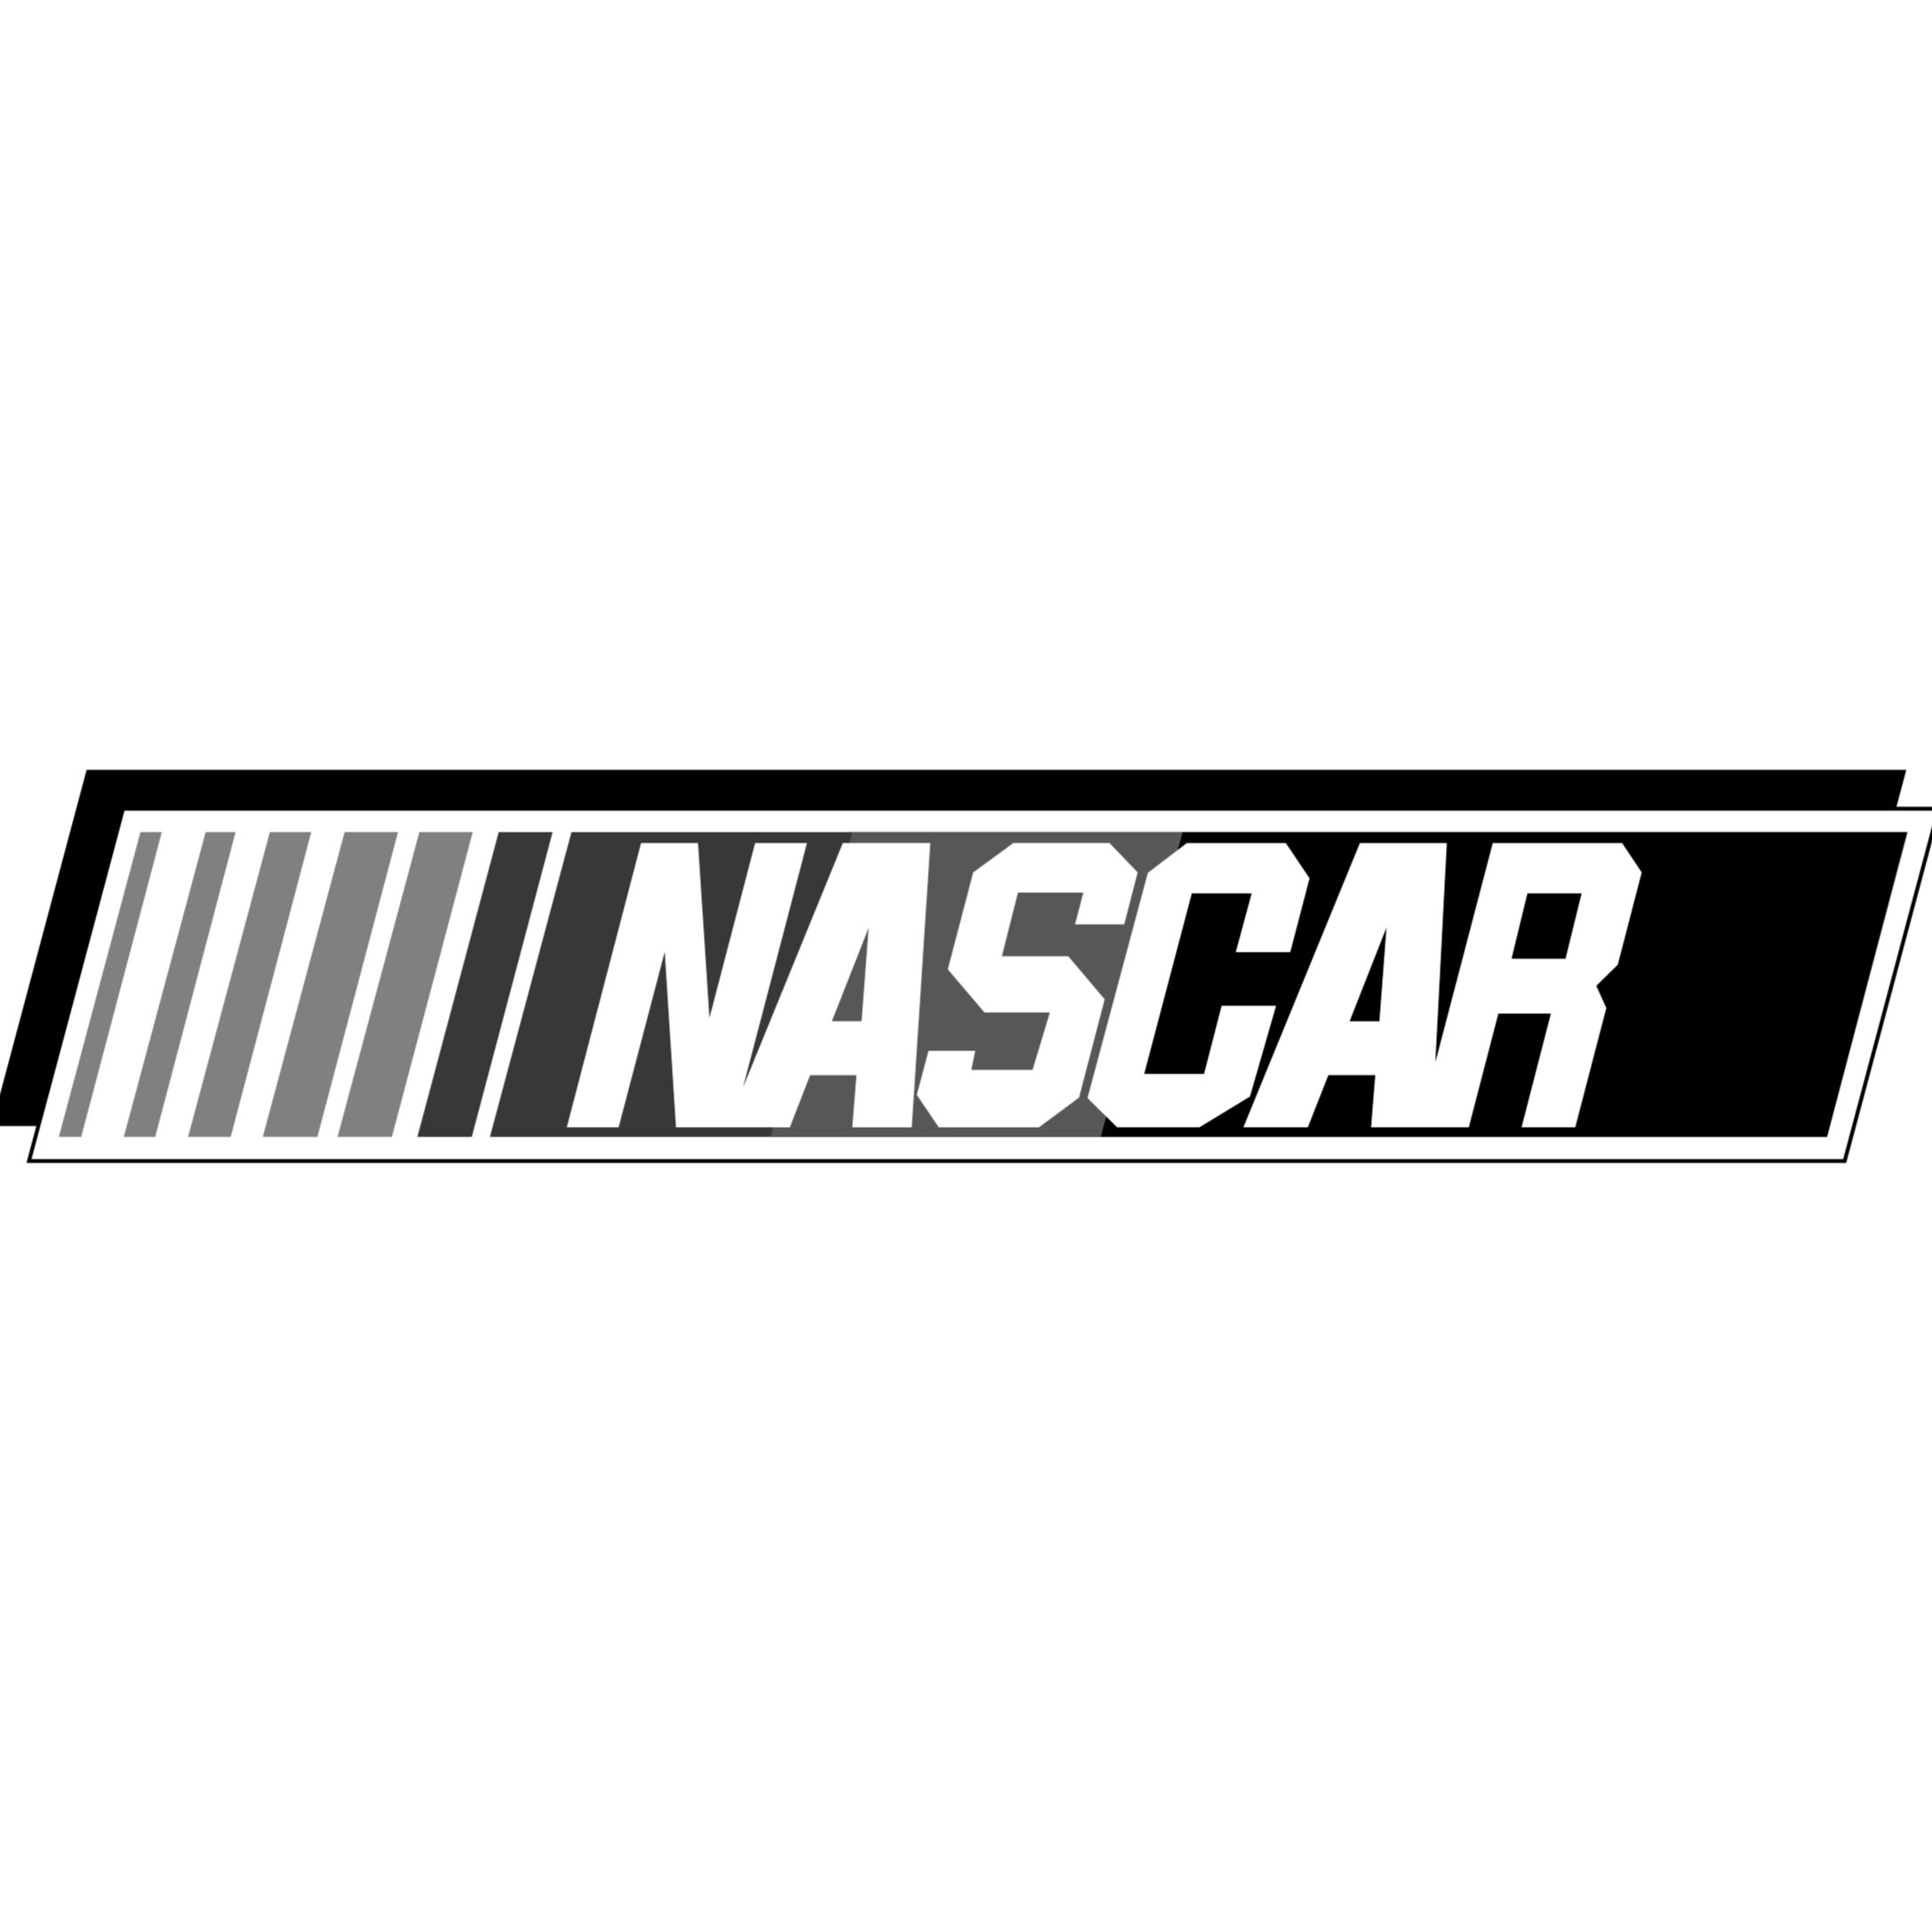 NASCAR.jpg